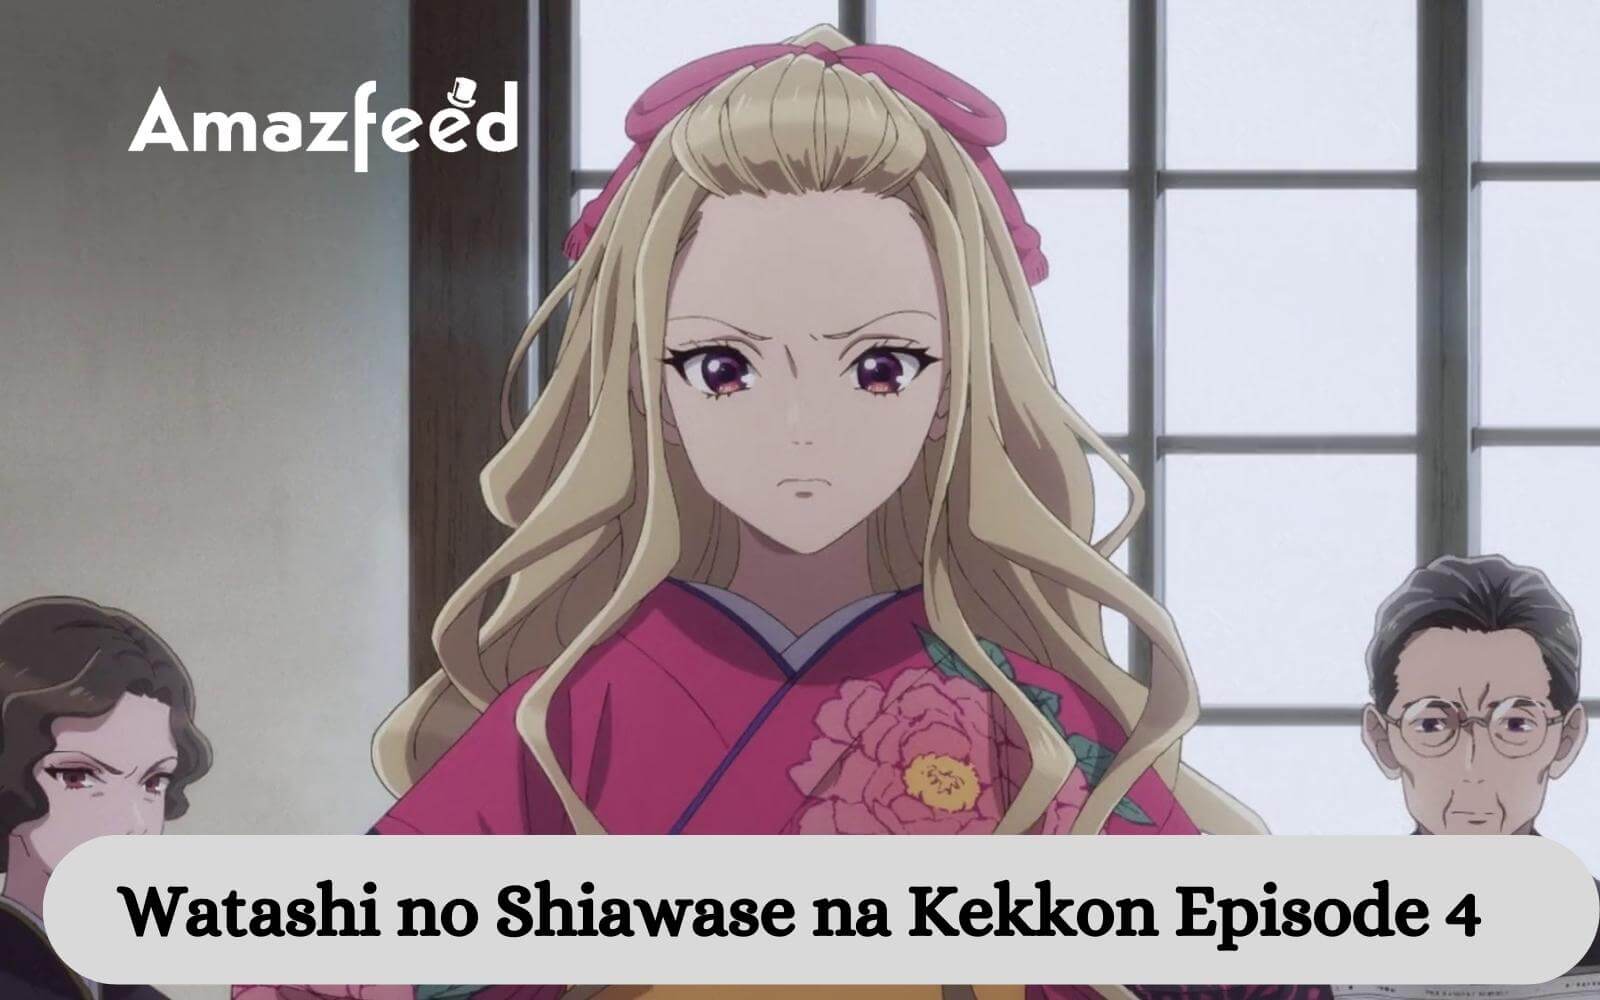 Watashi no Shiawase na Kekkon Season 1 Episode 4 Release Date and